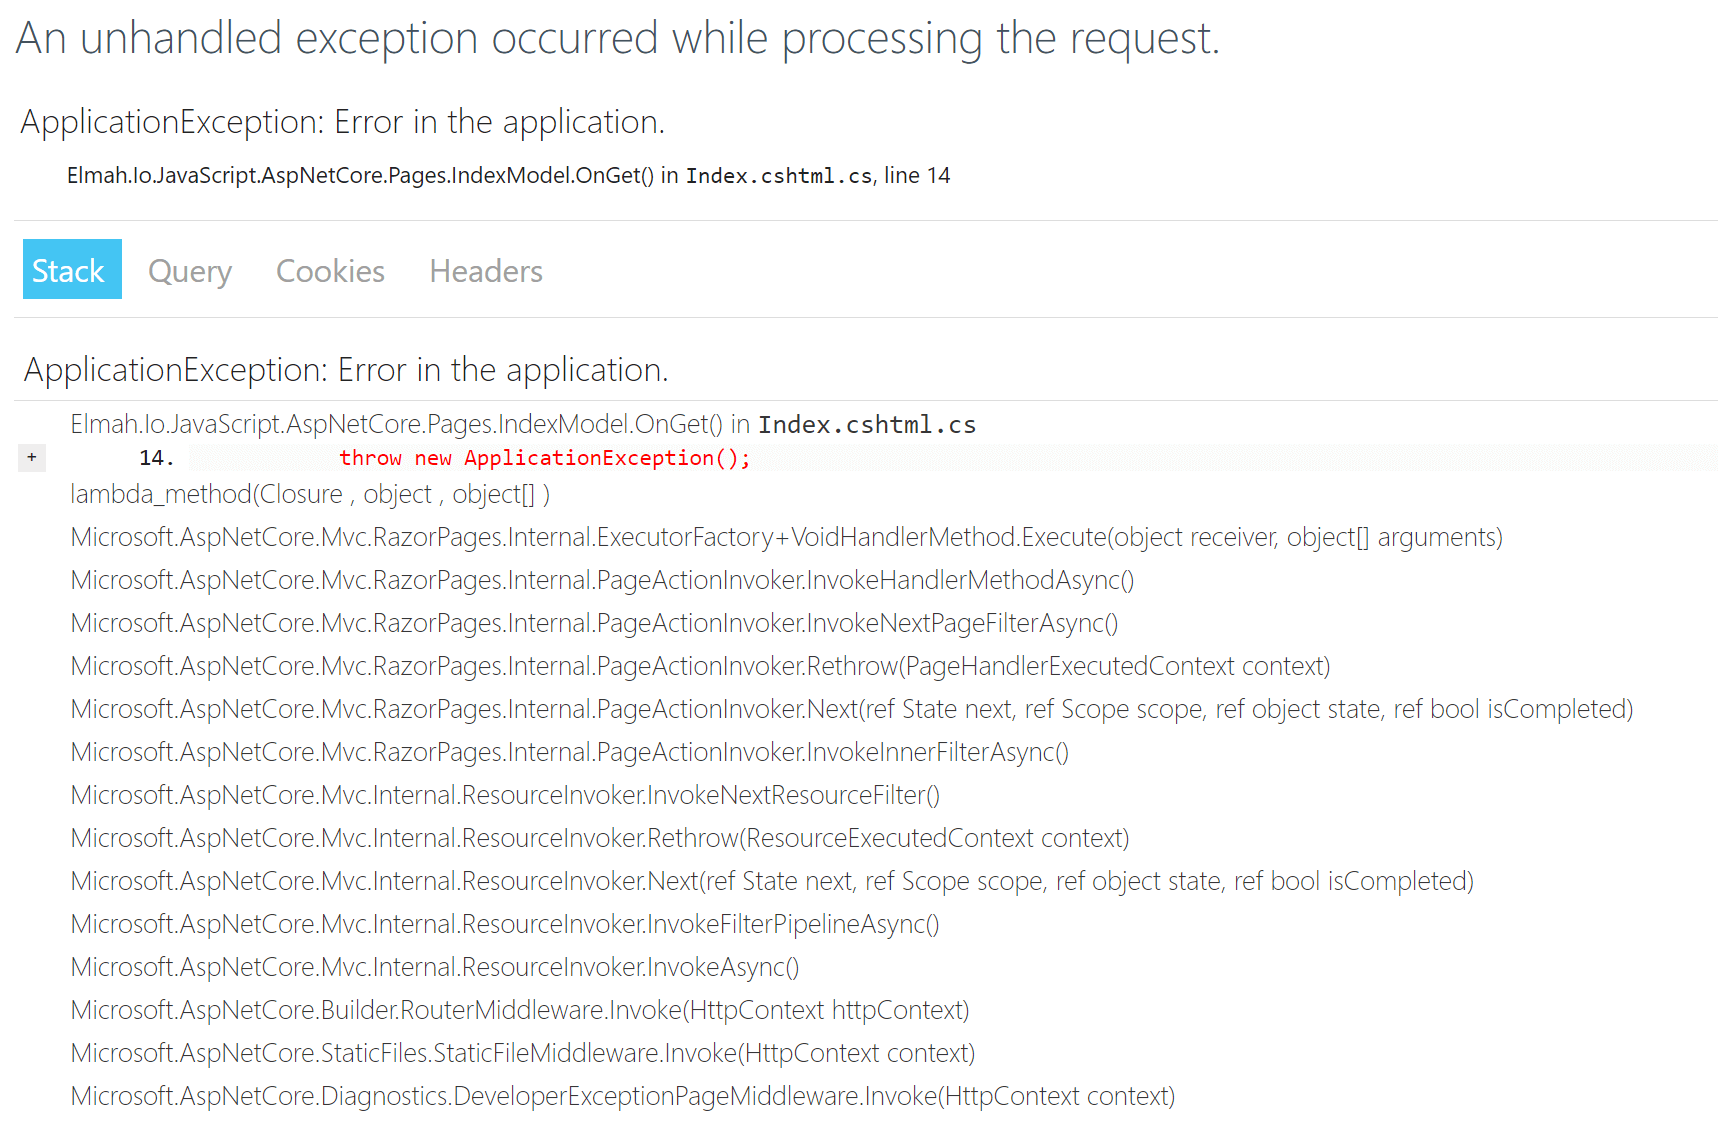 Developer exception page